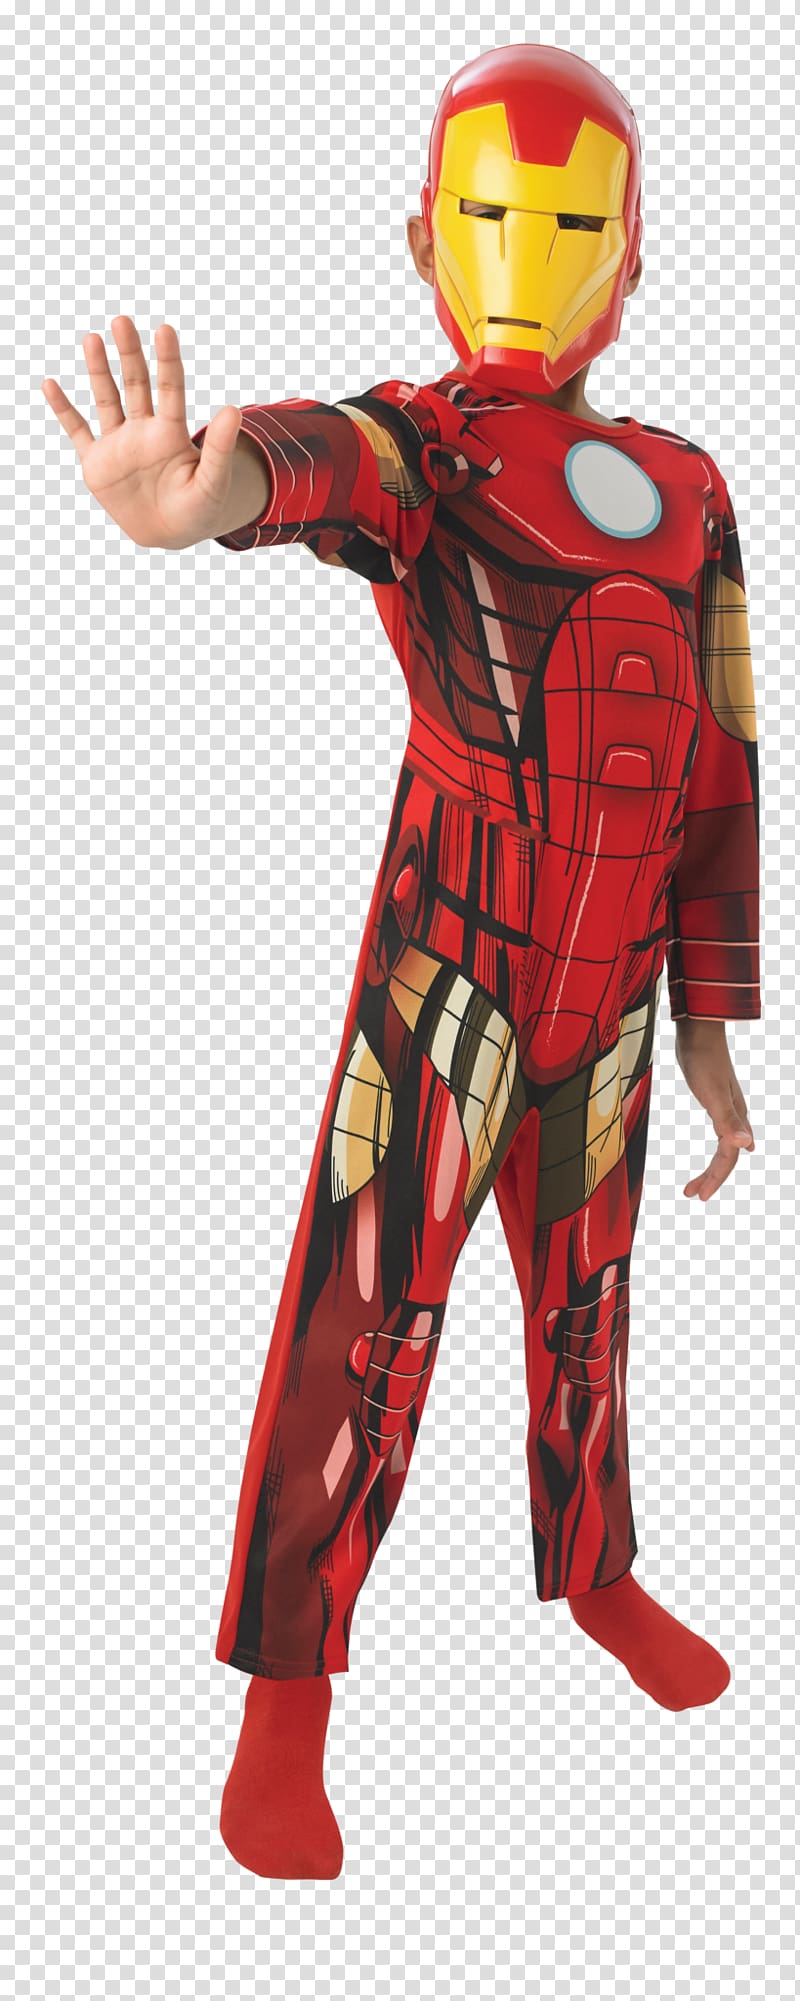 Iron Man Thor Costume Suit Dress-up, Iron Man transparent background PNG clipart